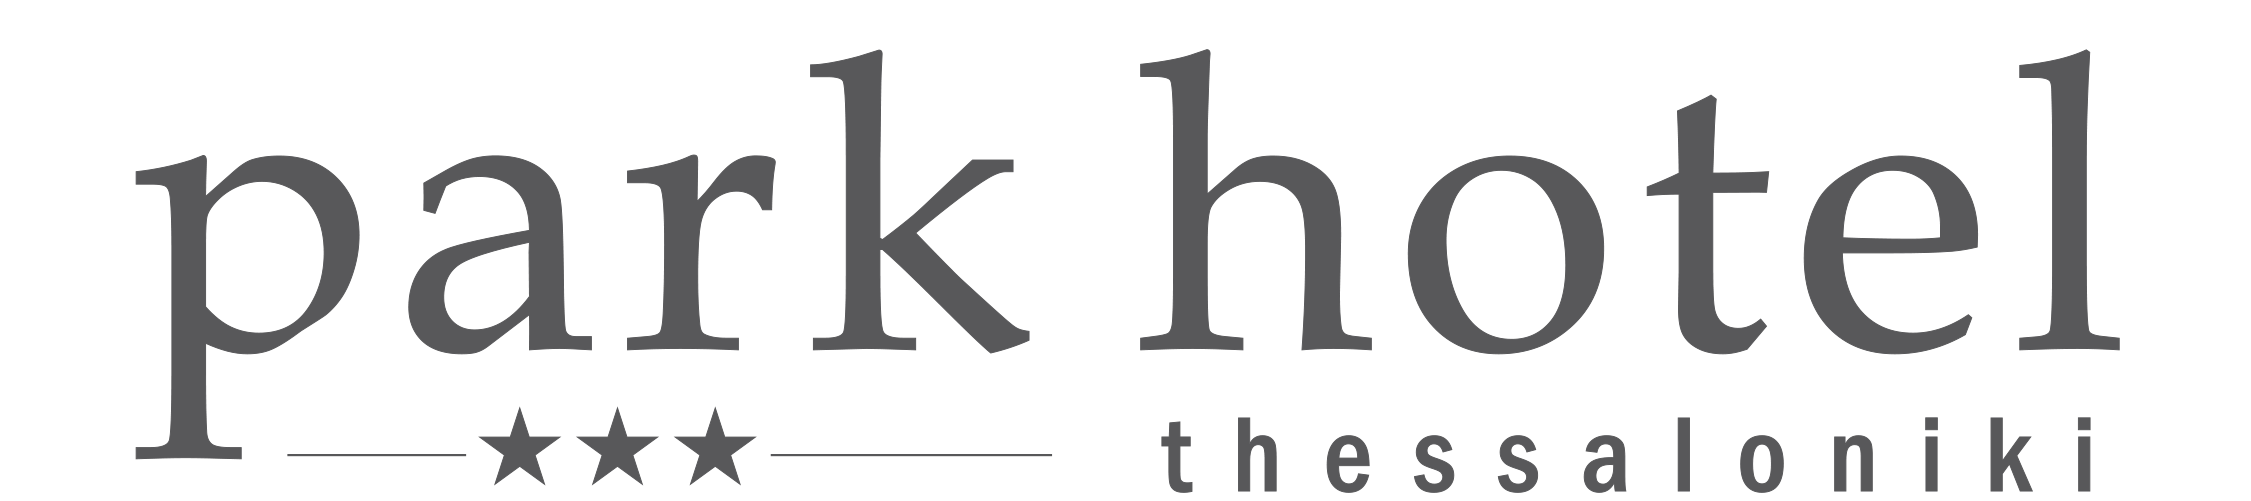 PARK Hotel logo